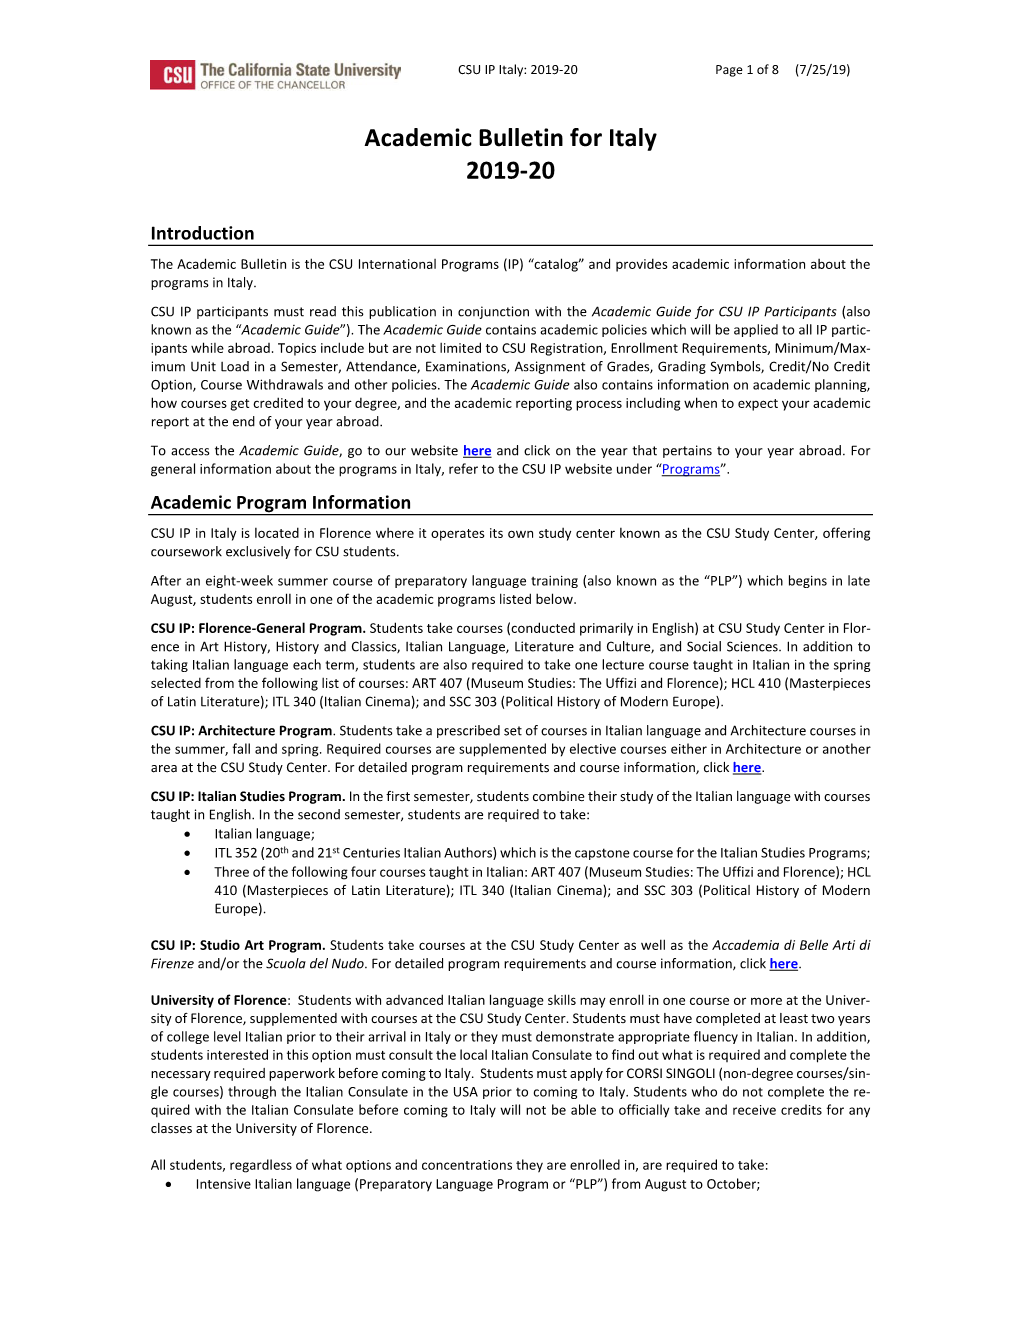 Academic Bulletin for Italy 2019-20